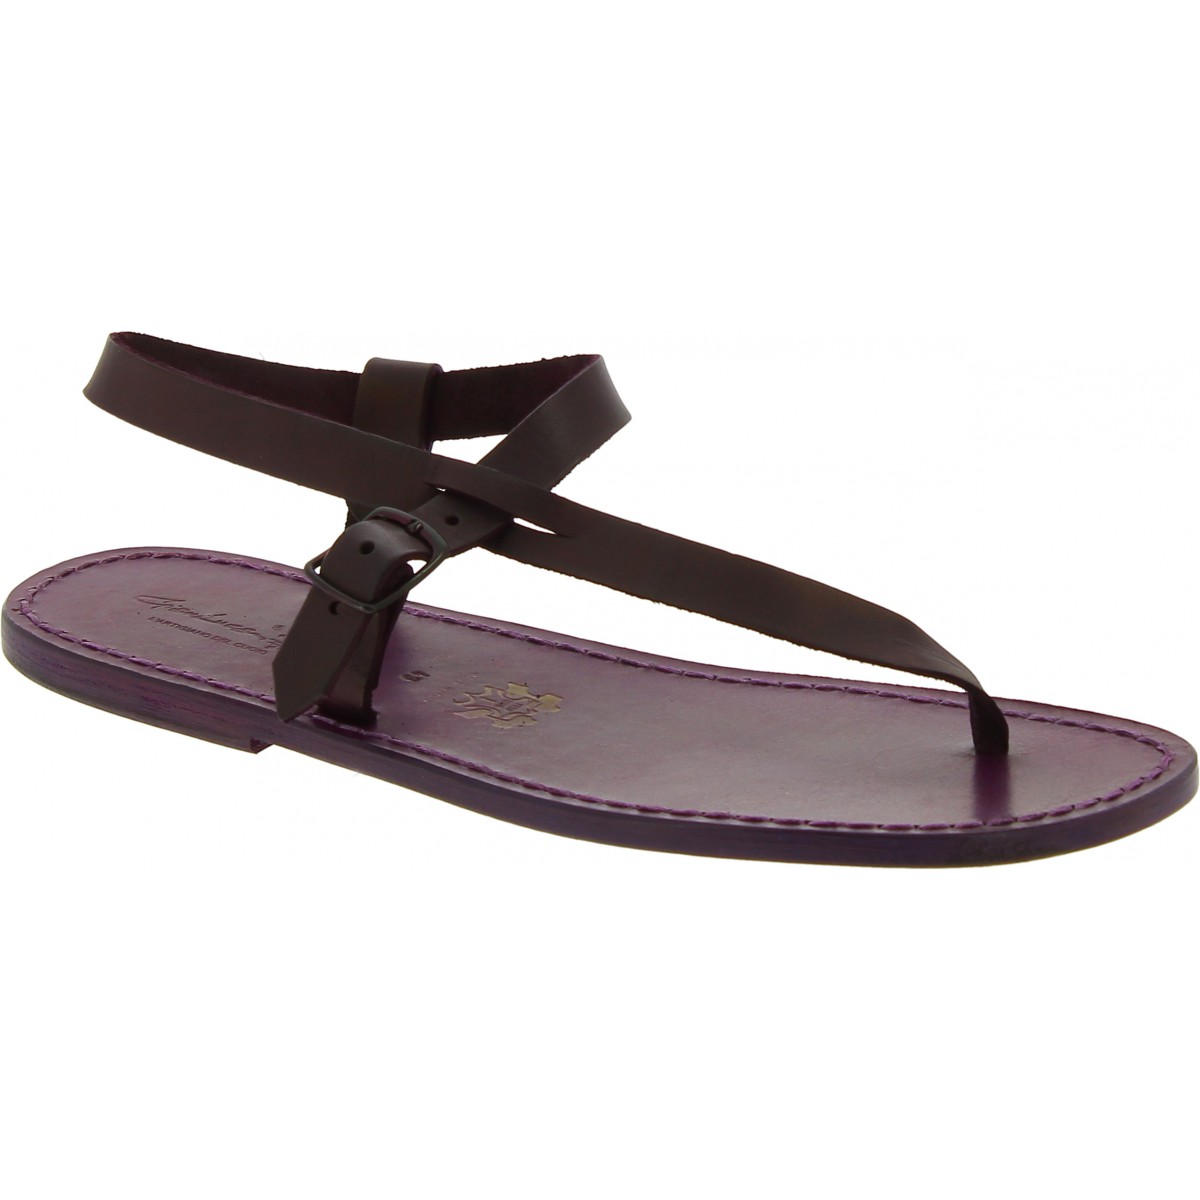 Handmade purple leather thong sandals 